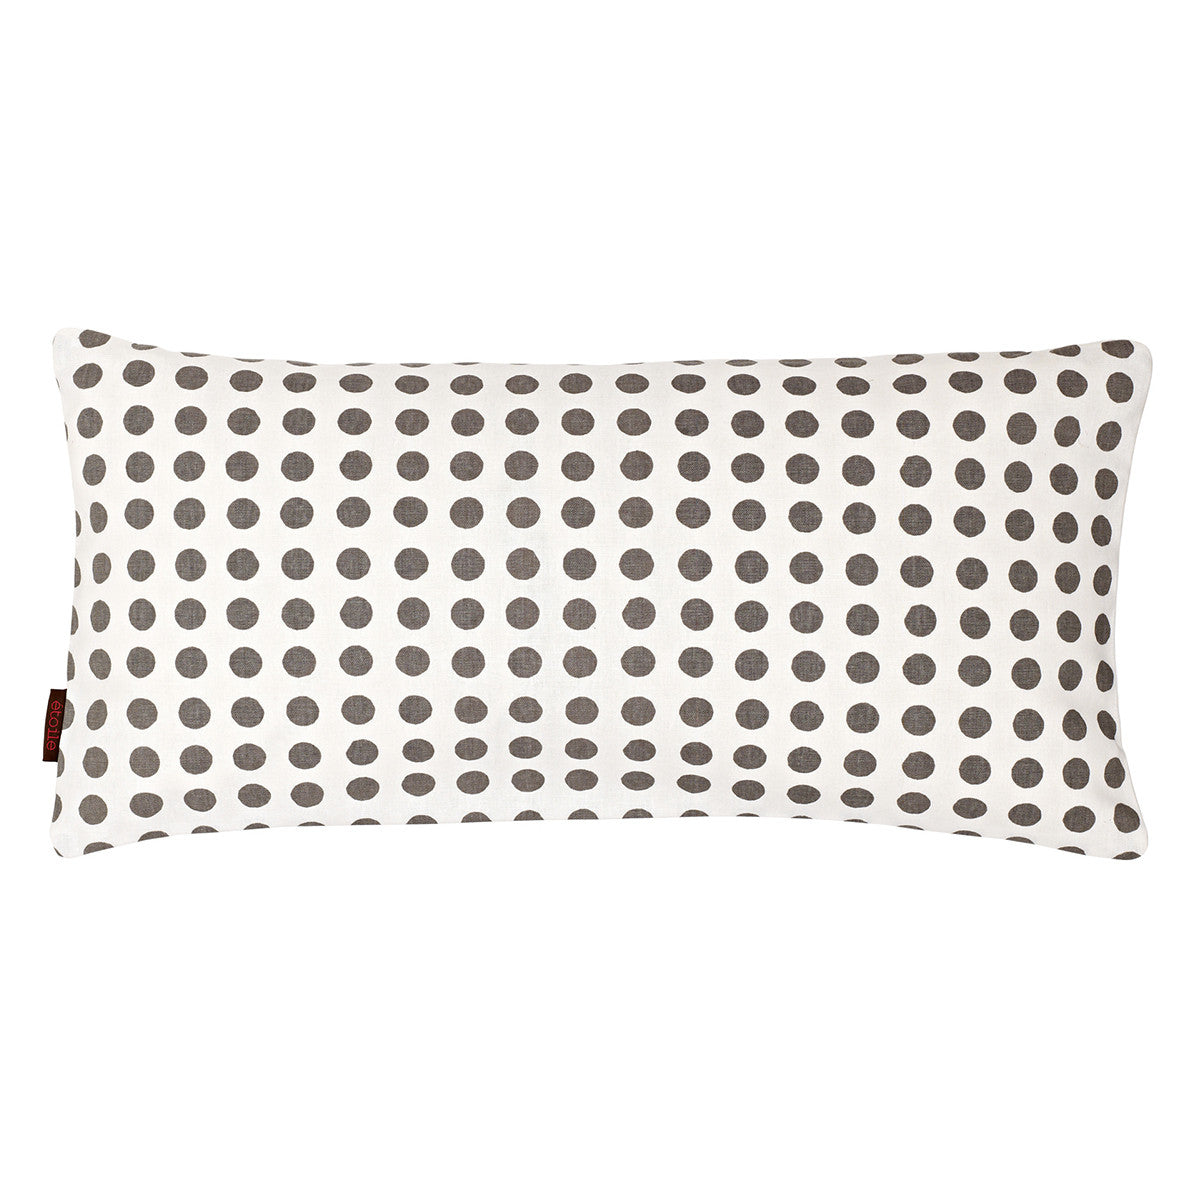 London Polka Dot Pattern Linen Rectangle Decorative Throw Pillow in Stone Grey 30x60cm (12x24")